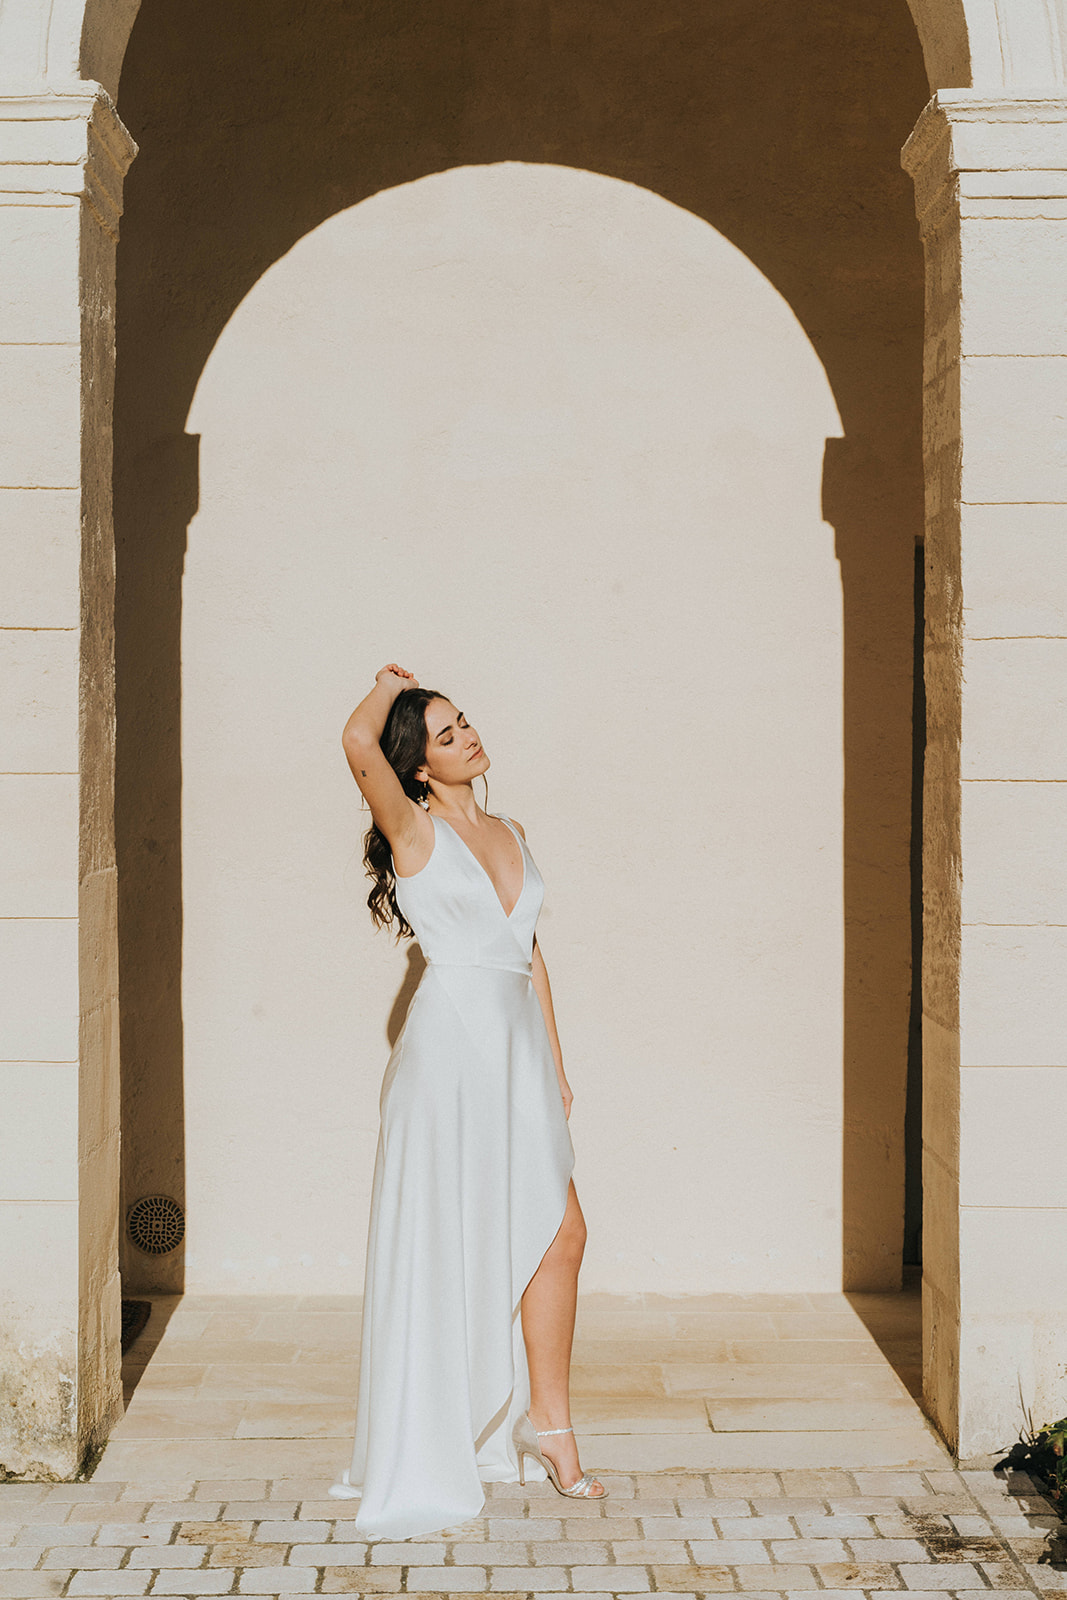 Tailor-made wedding dress - White